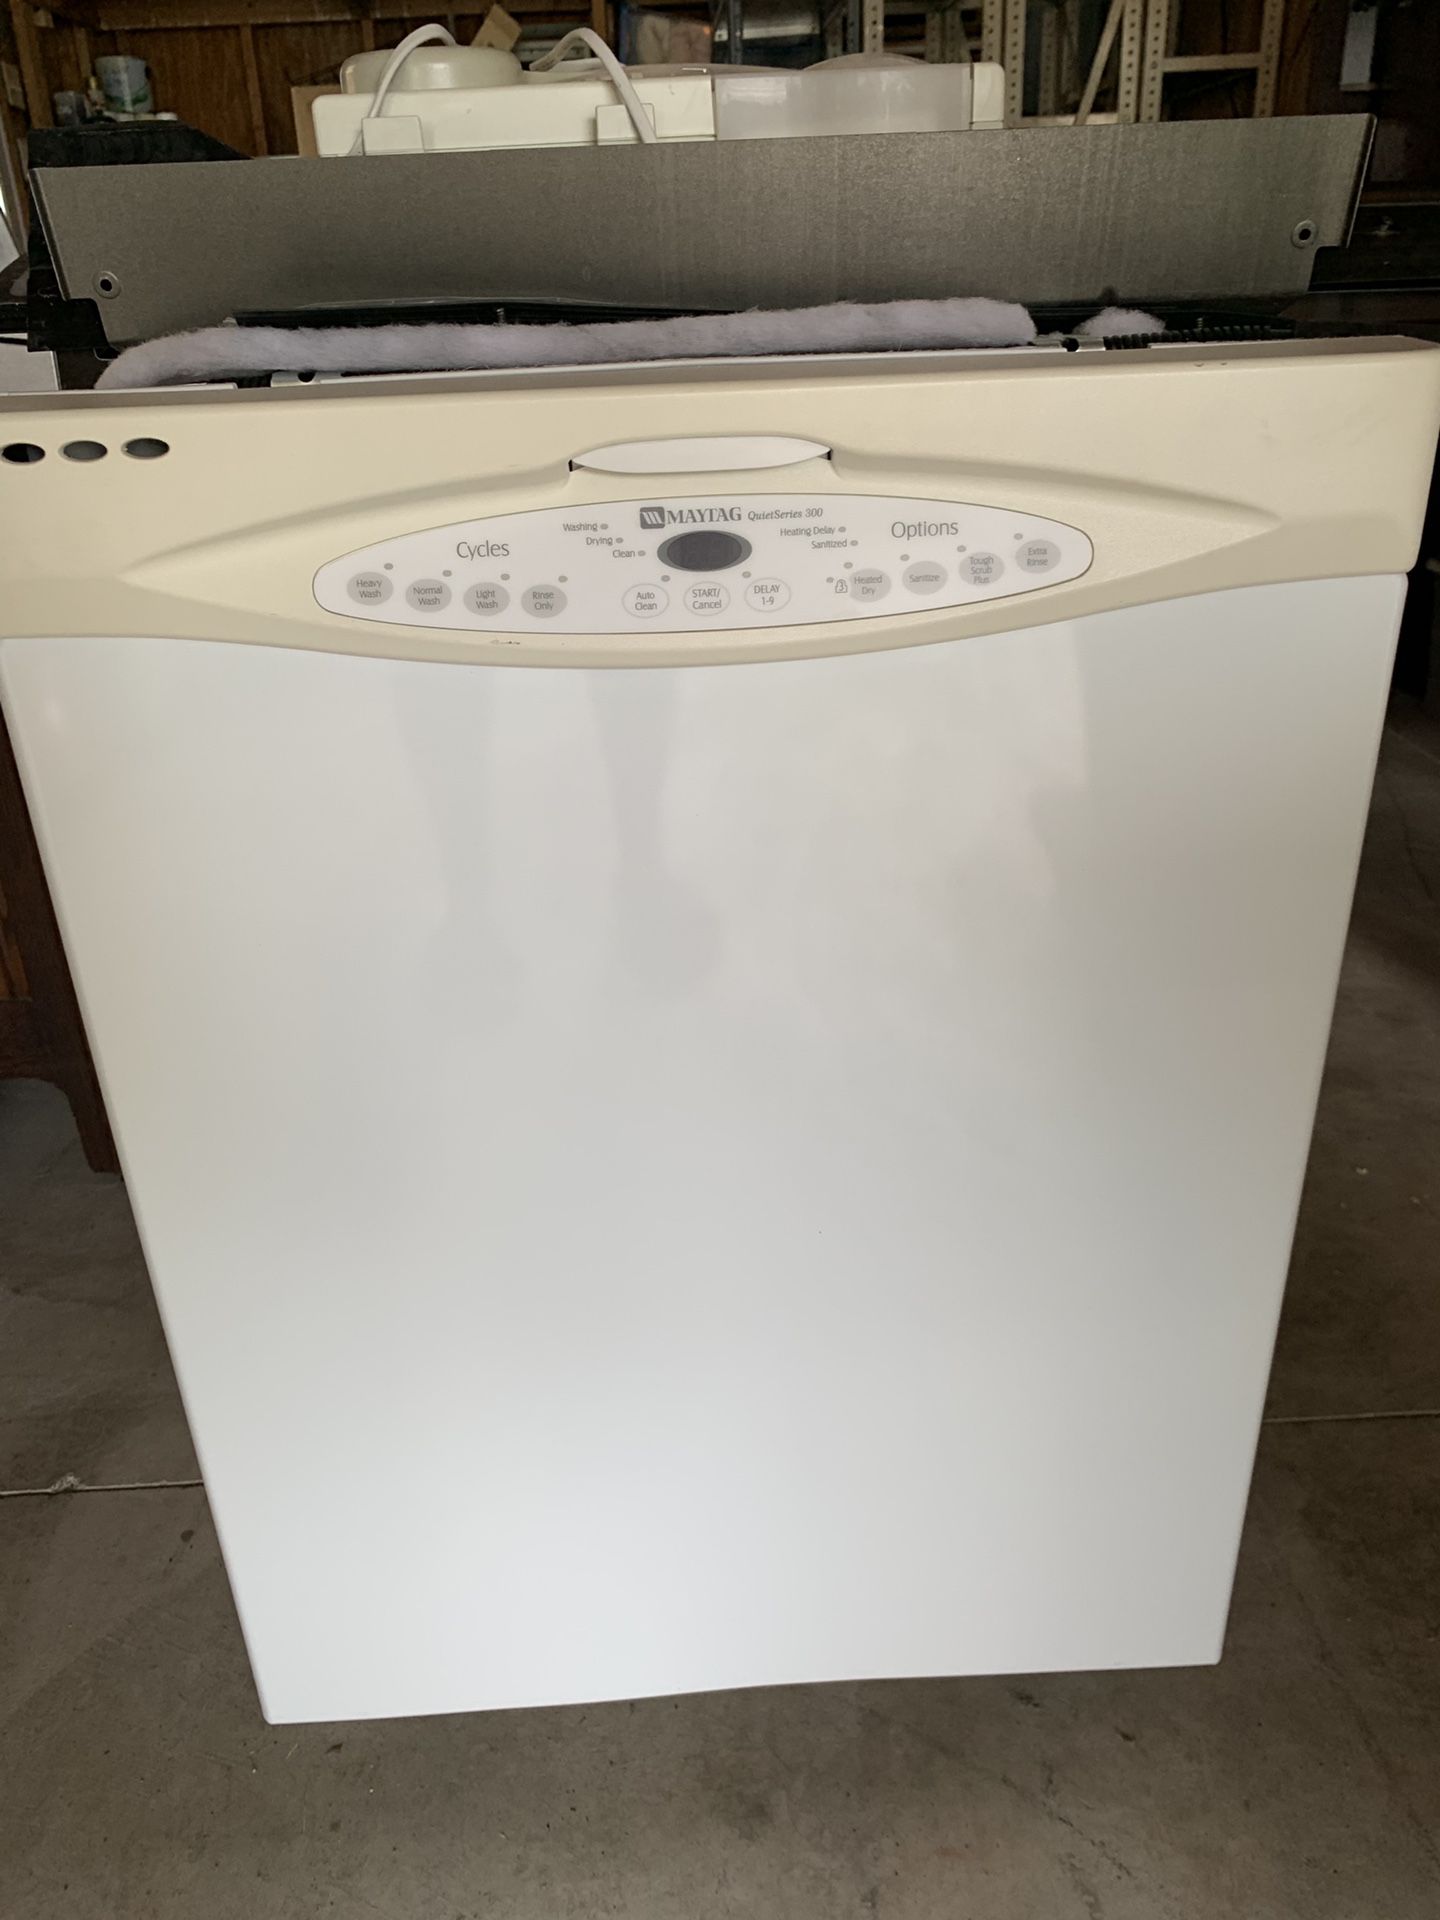 White Maytag Dishwasher (Good condition)